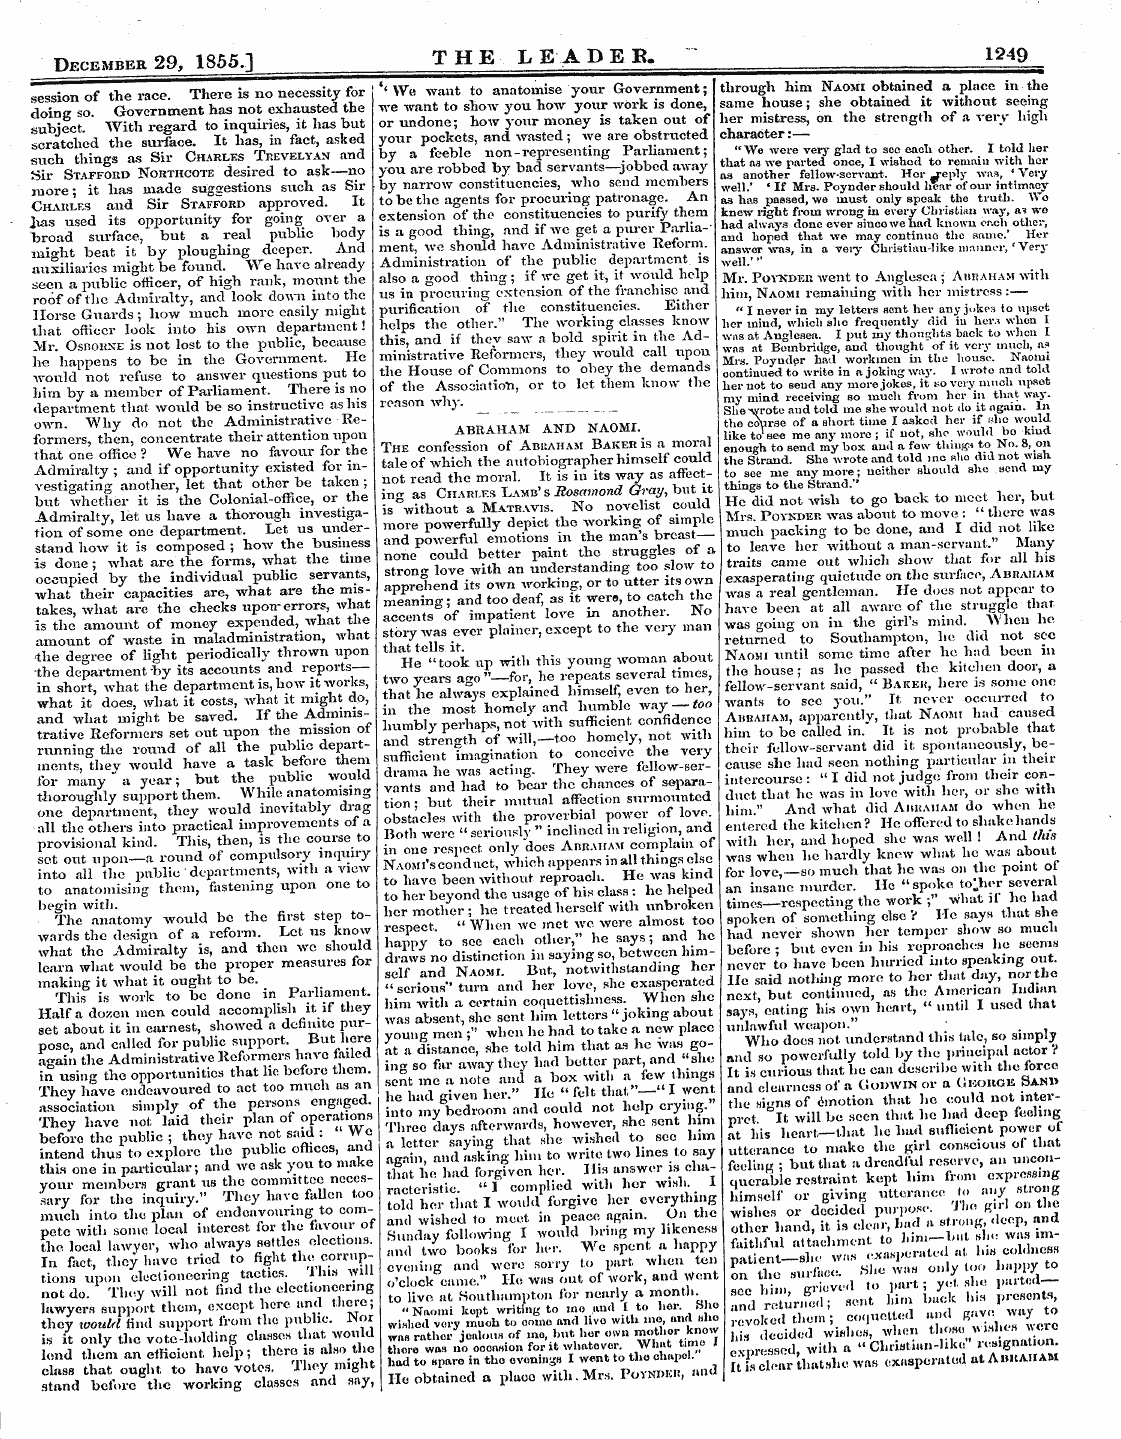 Leader (1850-1860): jS F Y, 2nd edition - December 29, 1855.] T He. Leadeb., 1^9